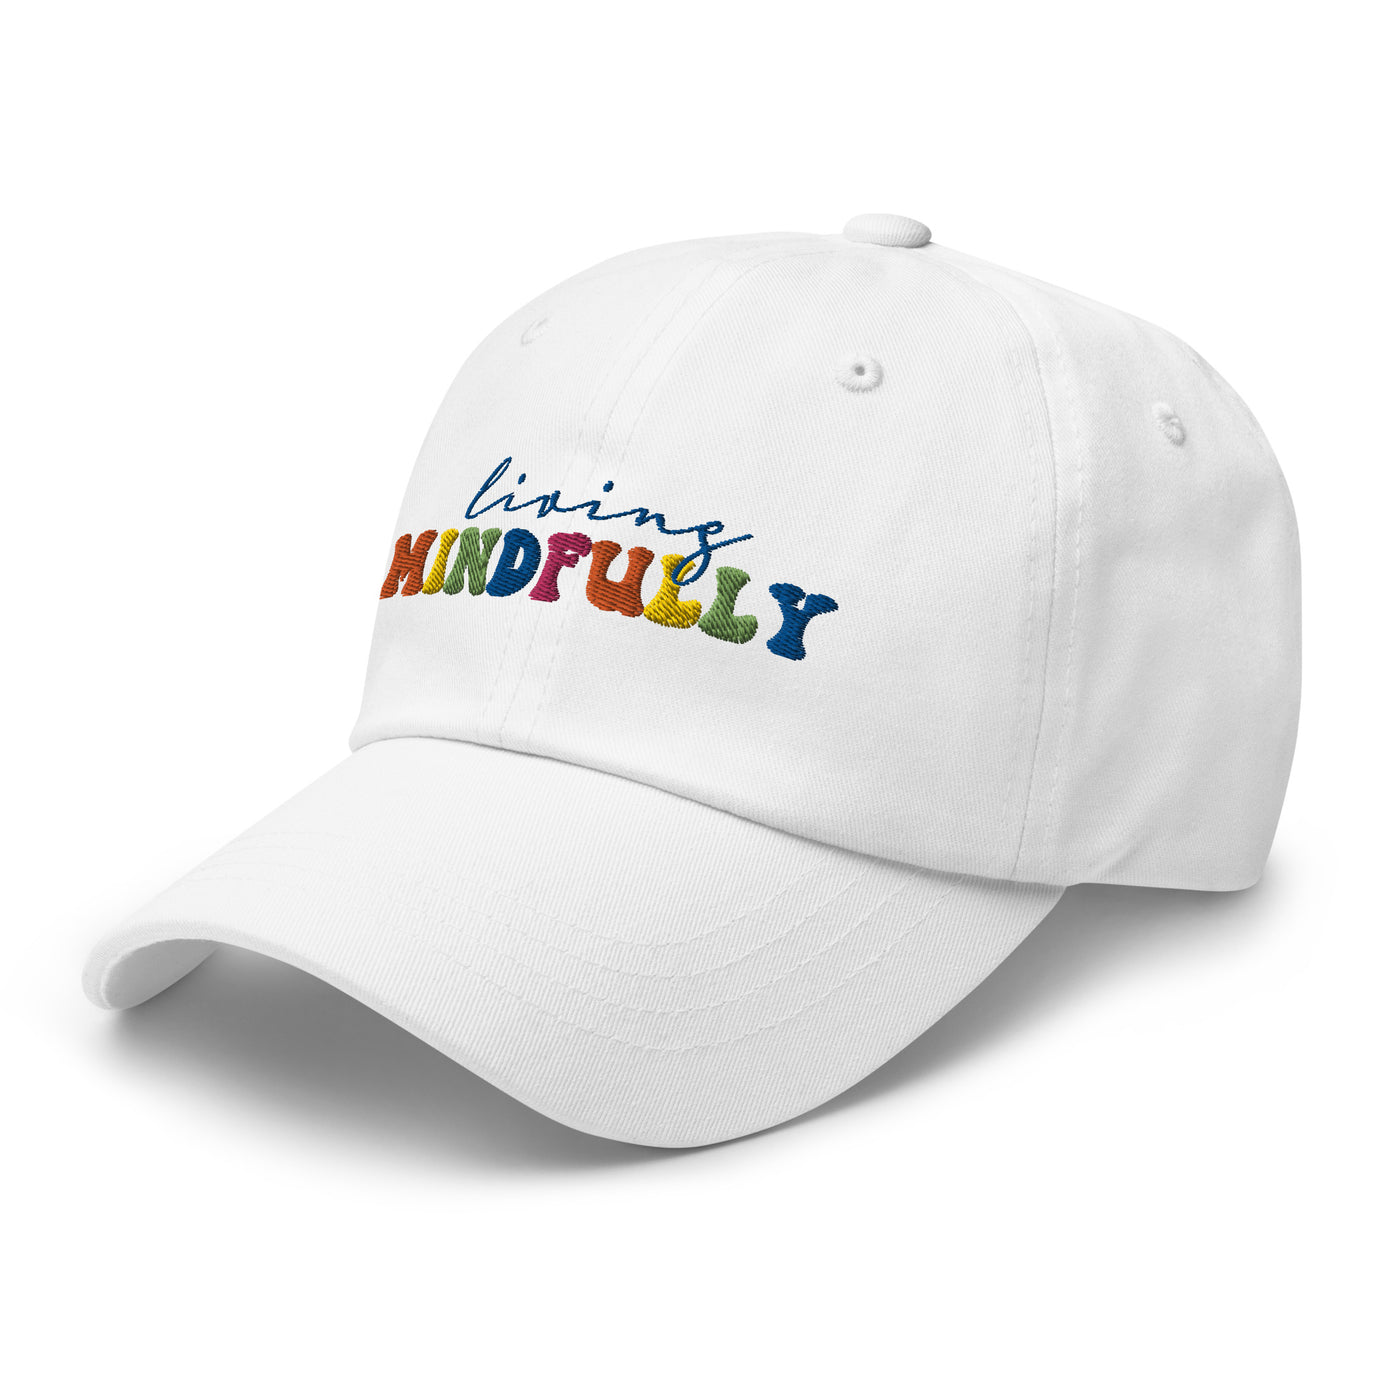 Living Mindfully Unisex Hat